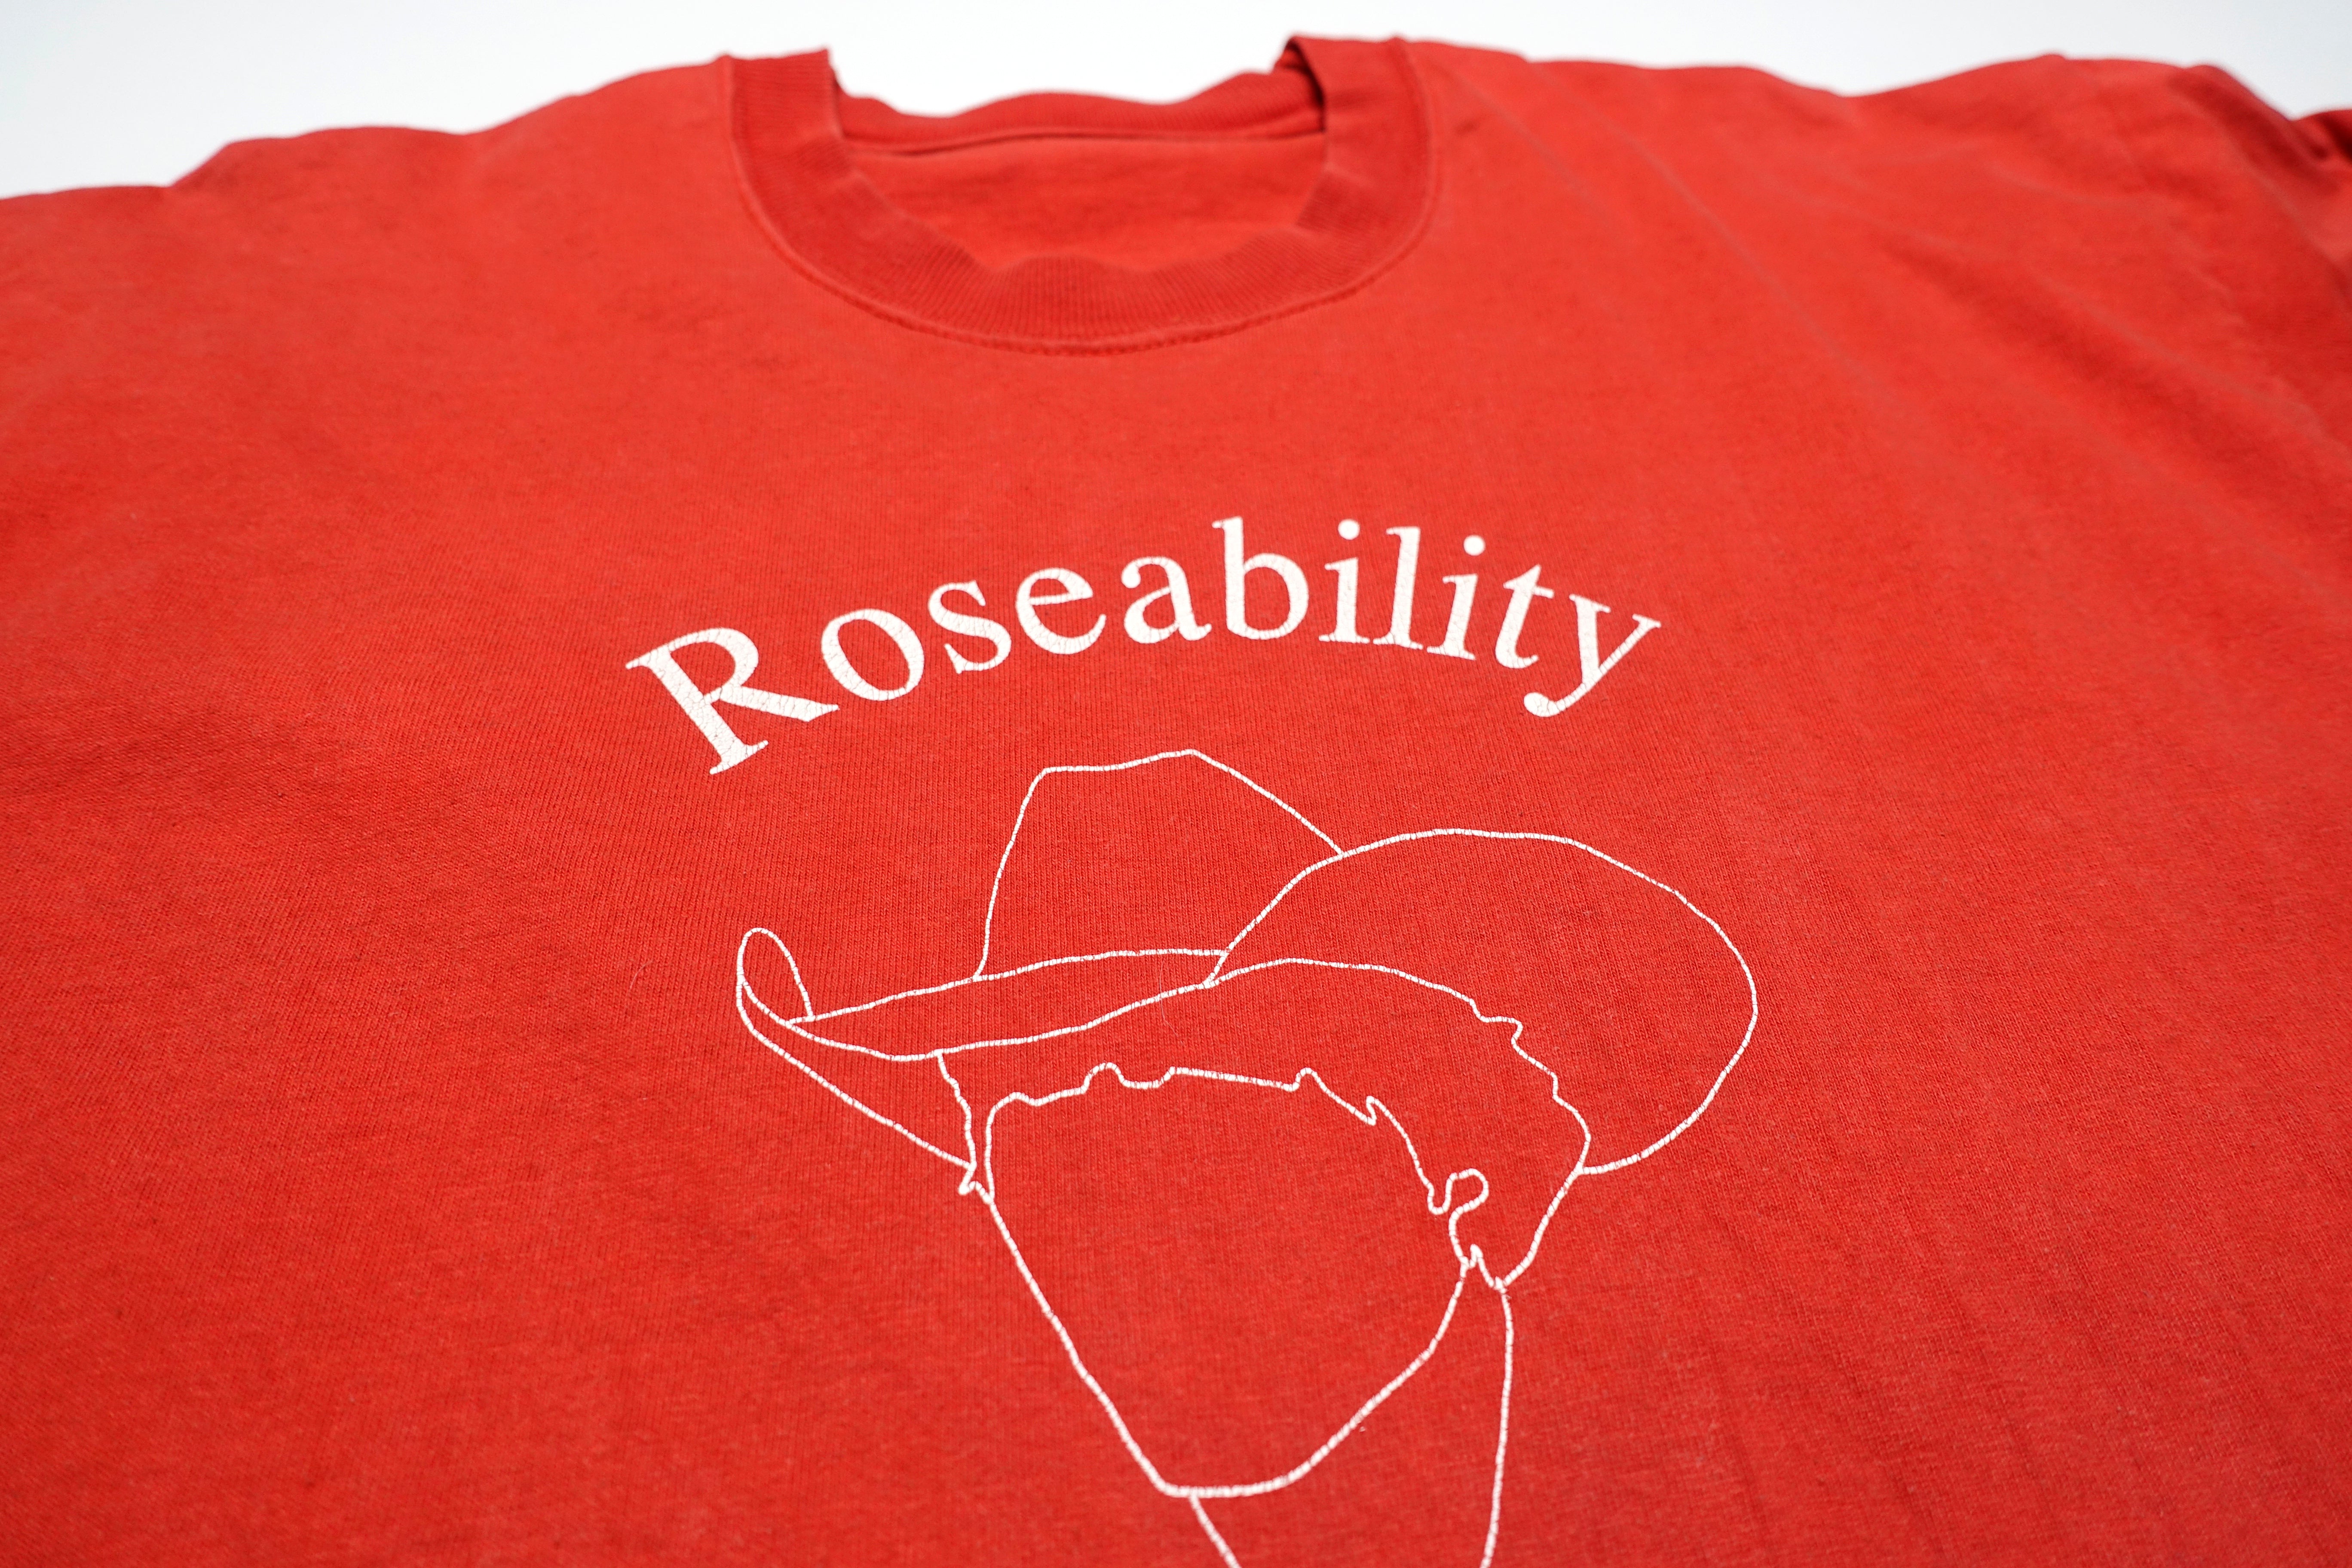 Idlewild - Roseability / 100 Broken Windows 2000 Tour Shirt Size Large